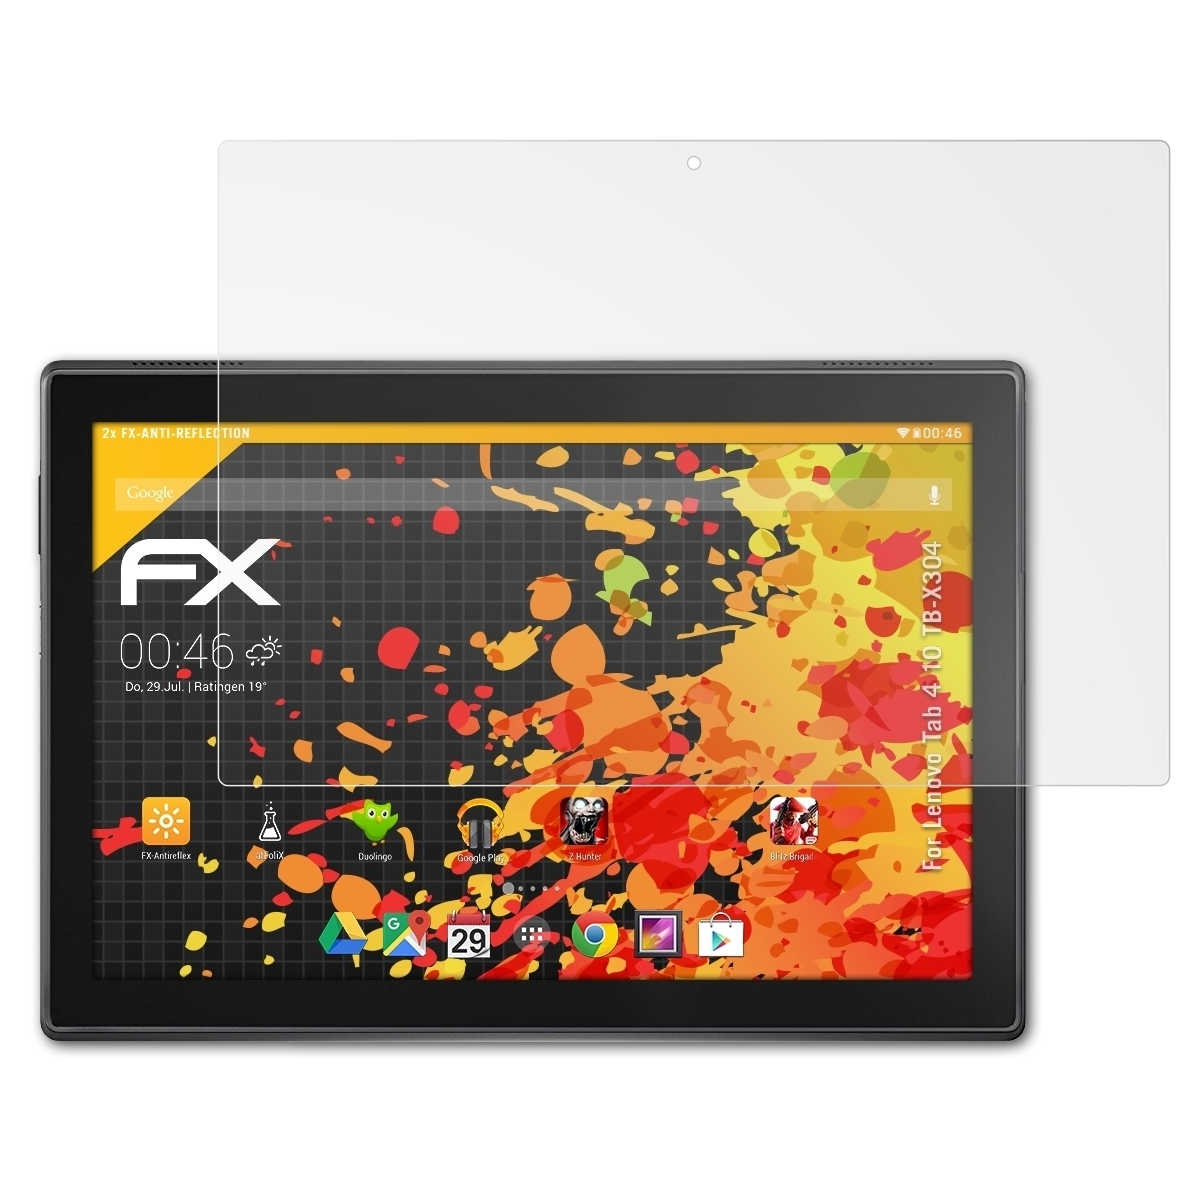 4 FX-Antireflex Displayschutz(für ATFOLIX 10 Tab Lenovo 2x (TB-X304))